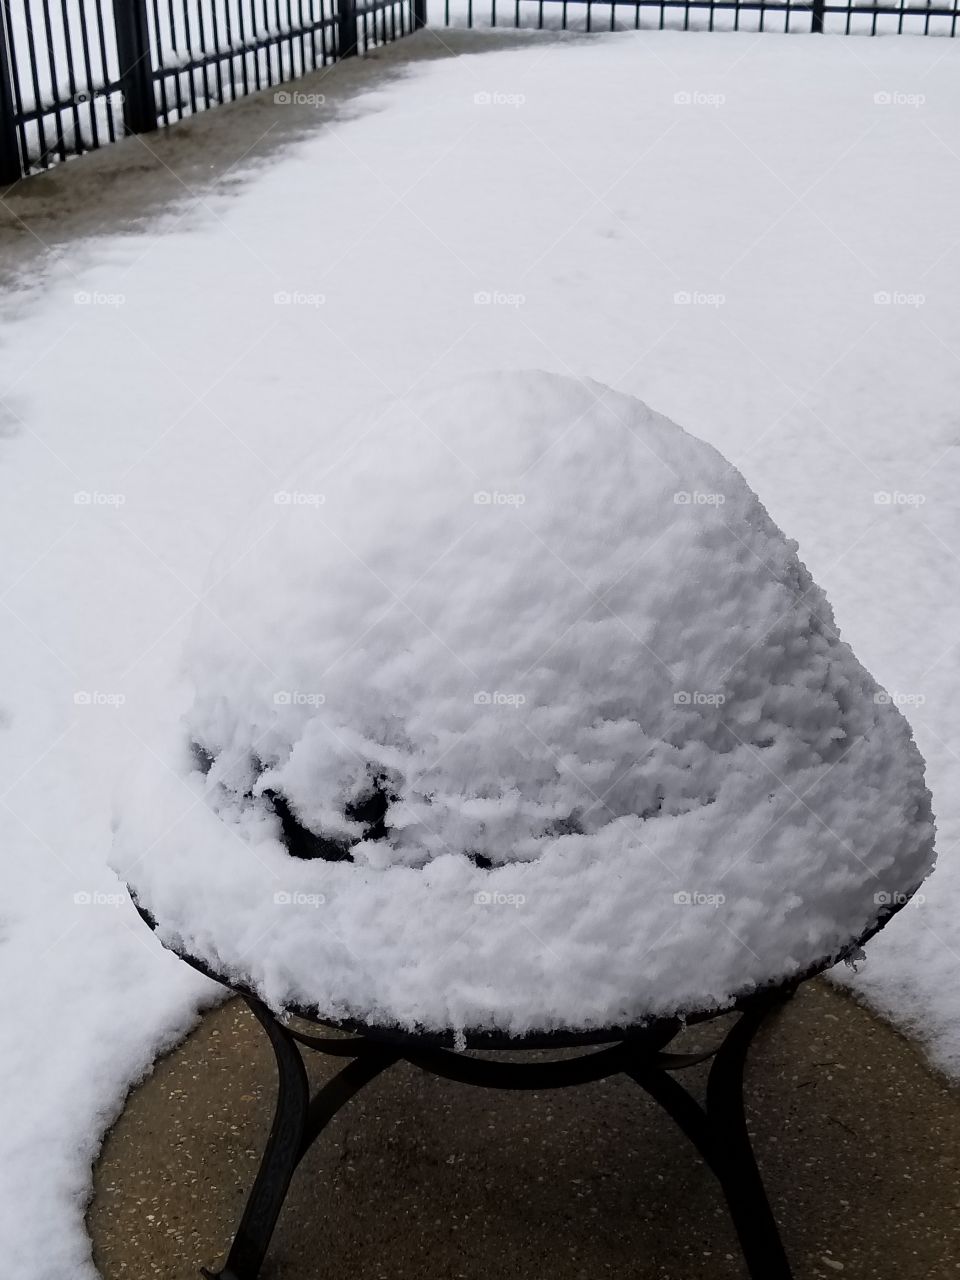 "snow globe"